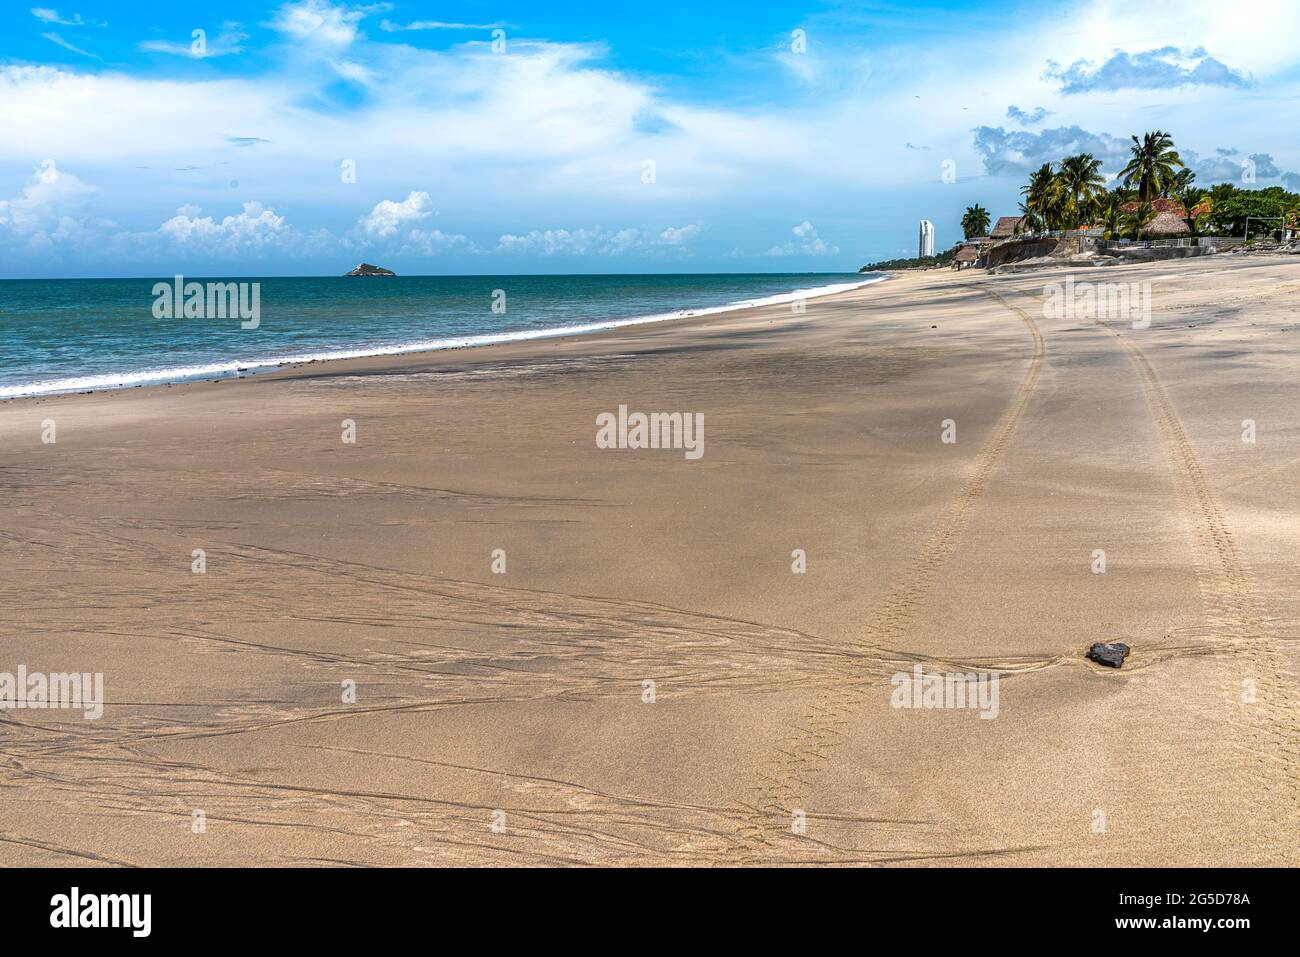 Beach scene landscape image from the Santa Clara beach on the Pacific coast in Panama Stock Photo